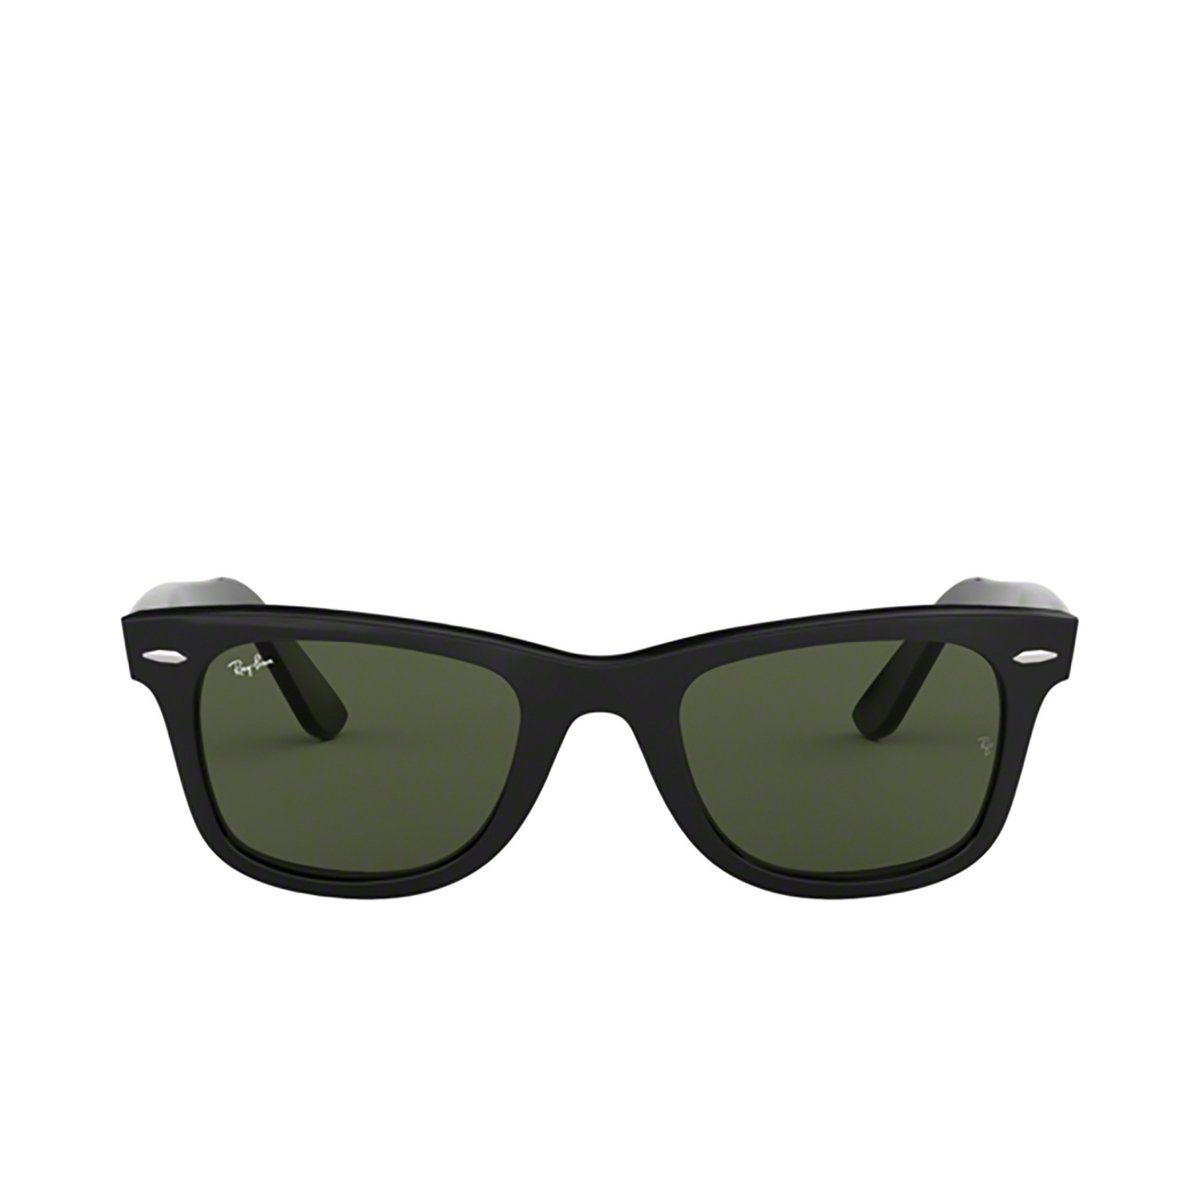 Ray-Ban WAYFARER Sunglasses 901 Black - front view